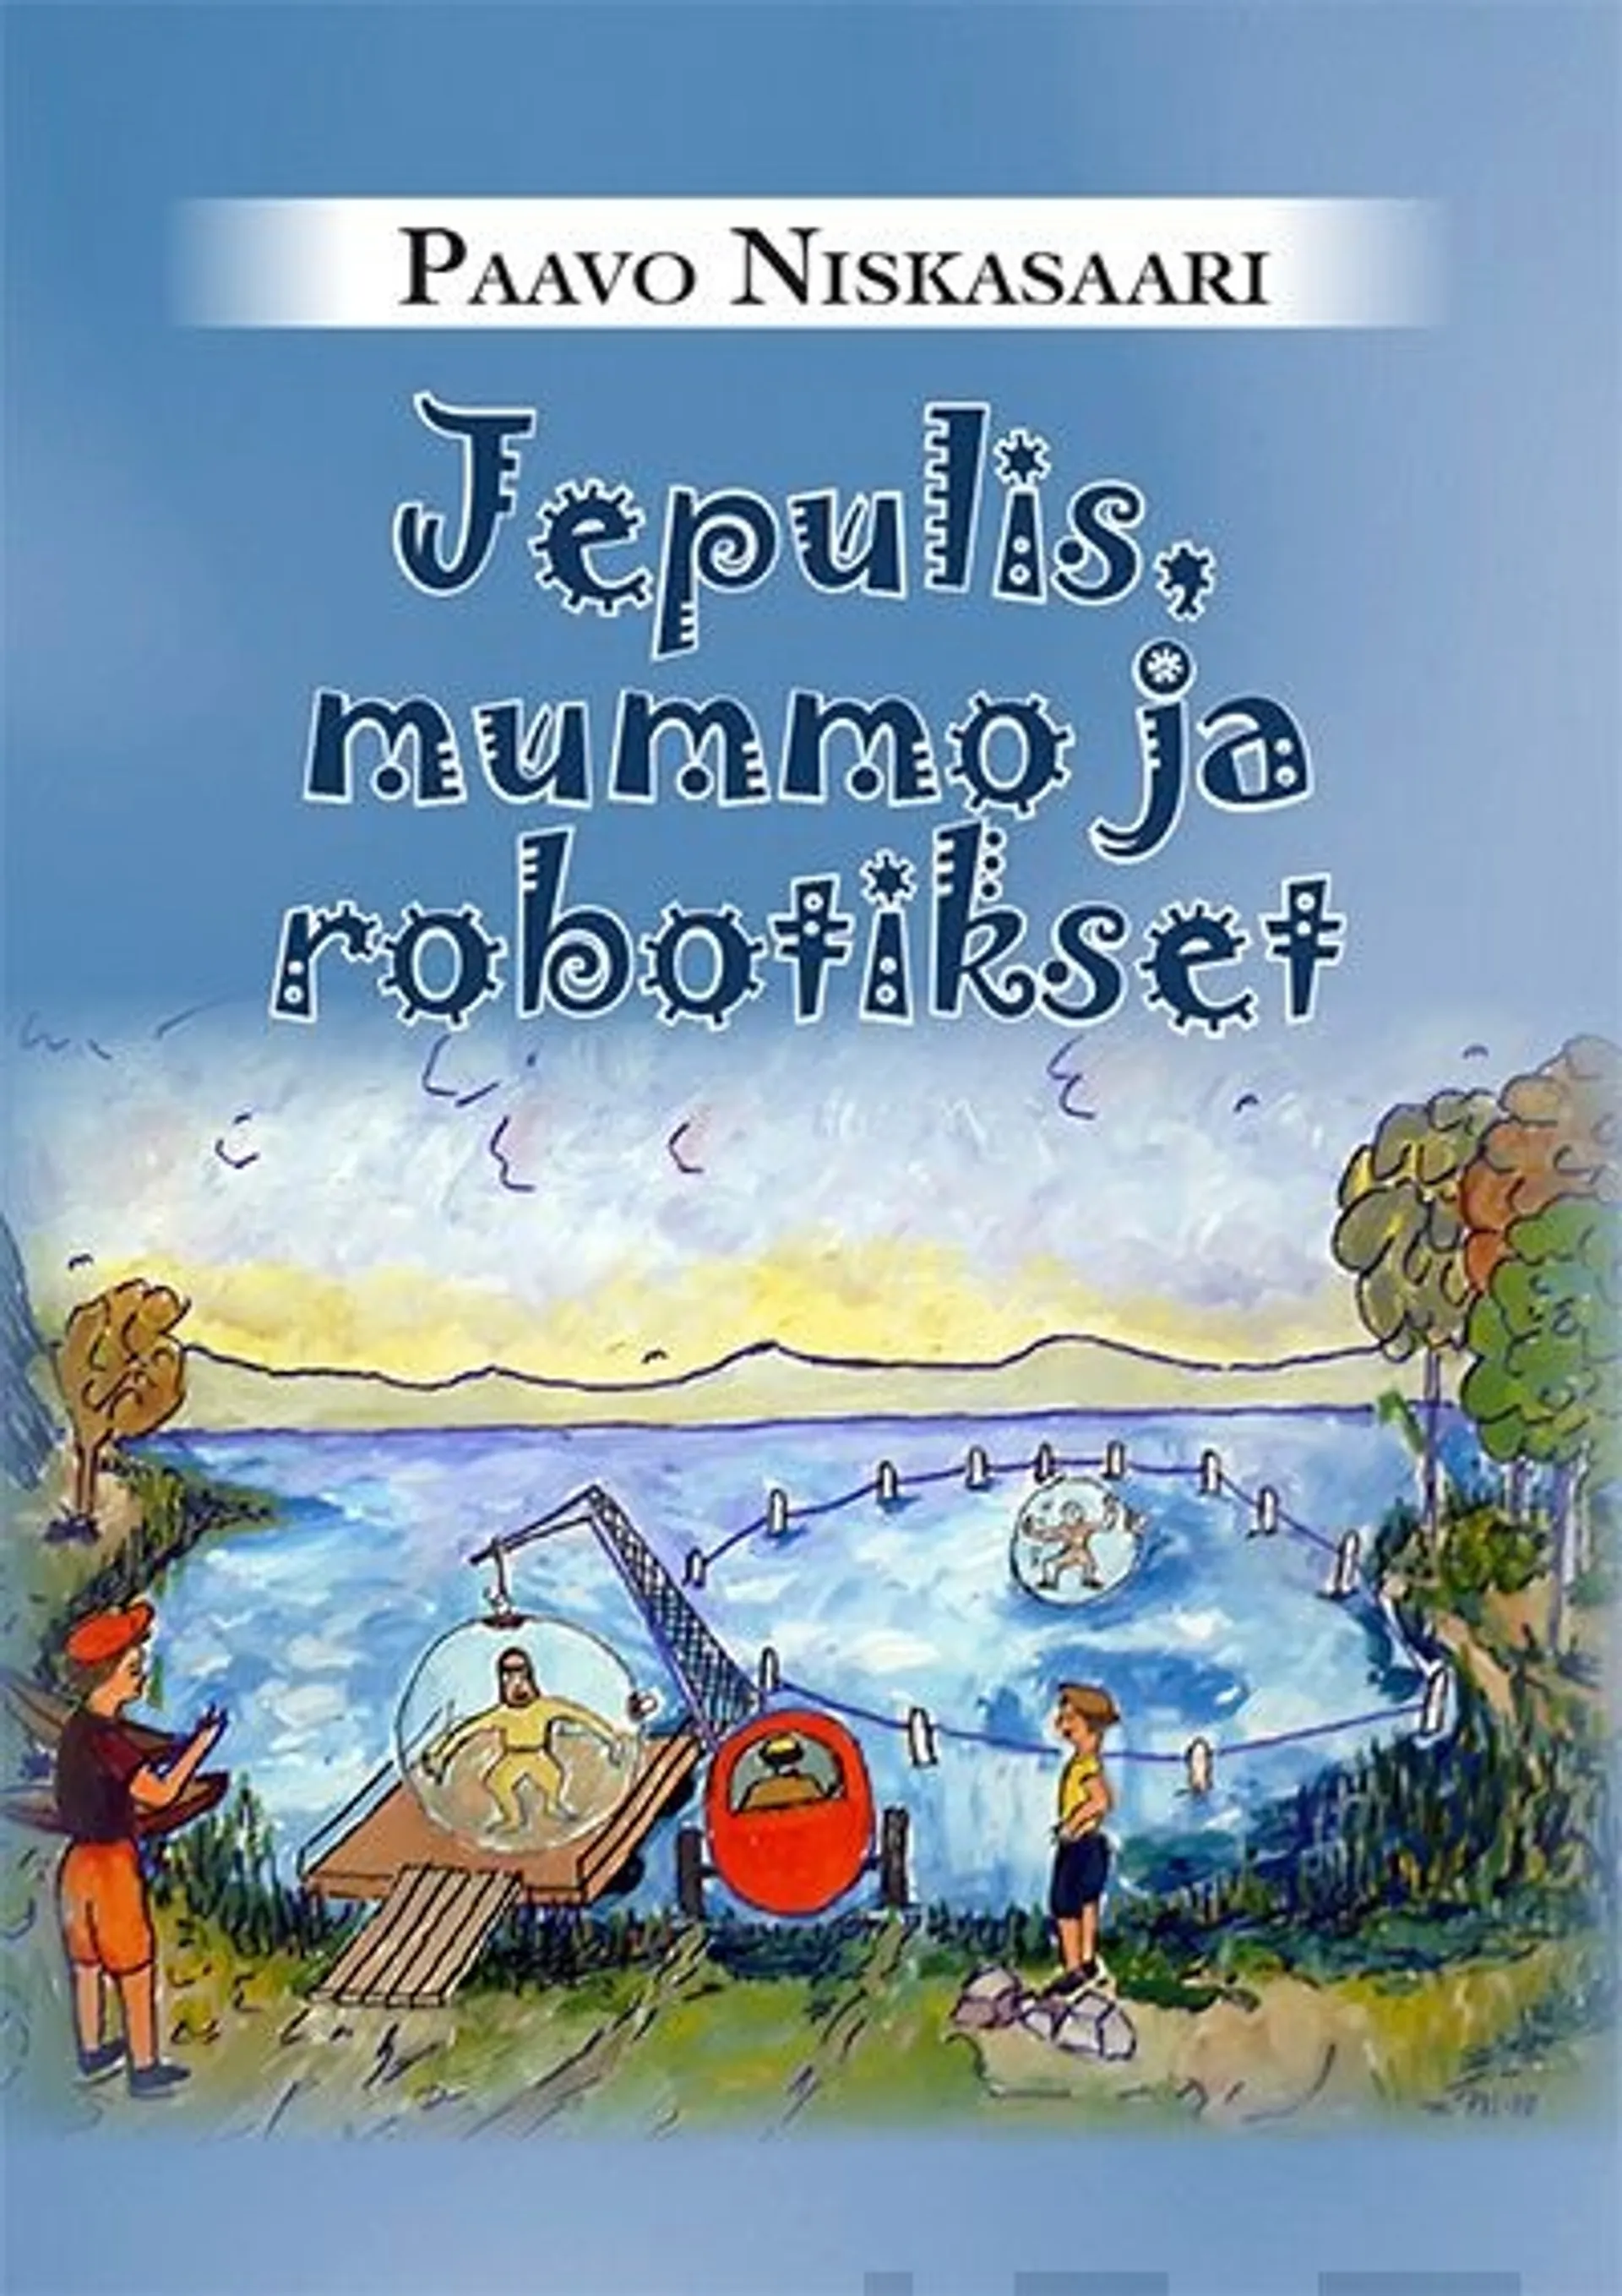 Niskasaari, Jepulis, mummo ja robotikset